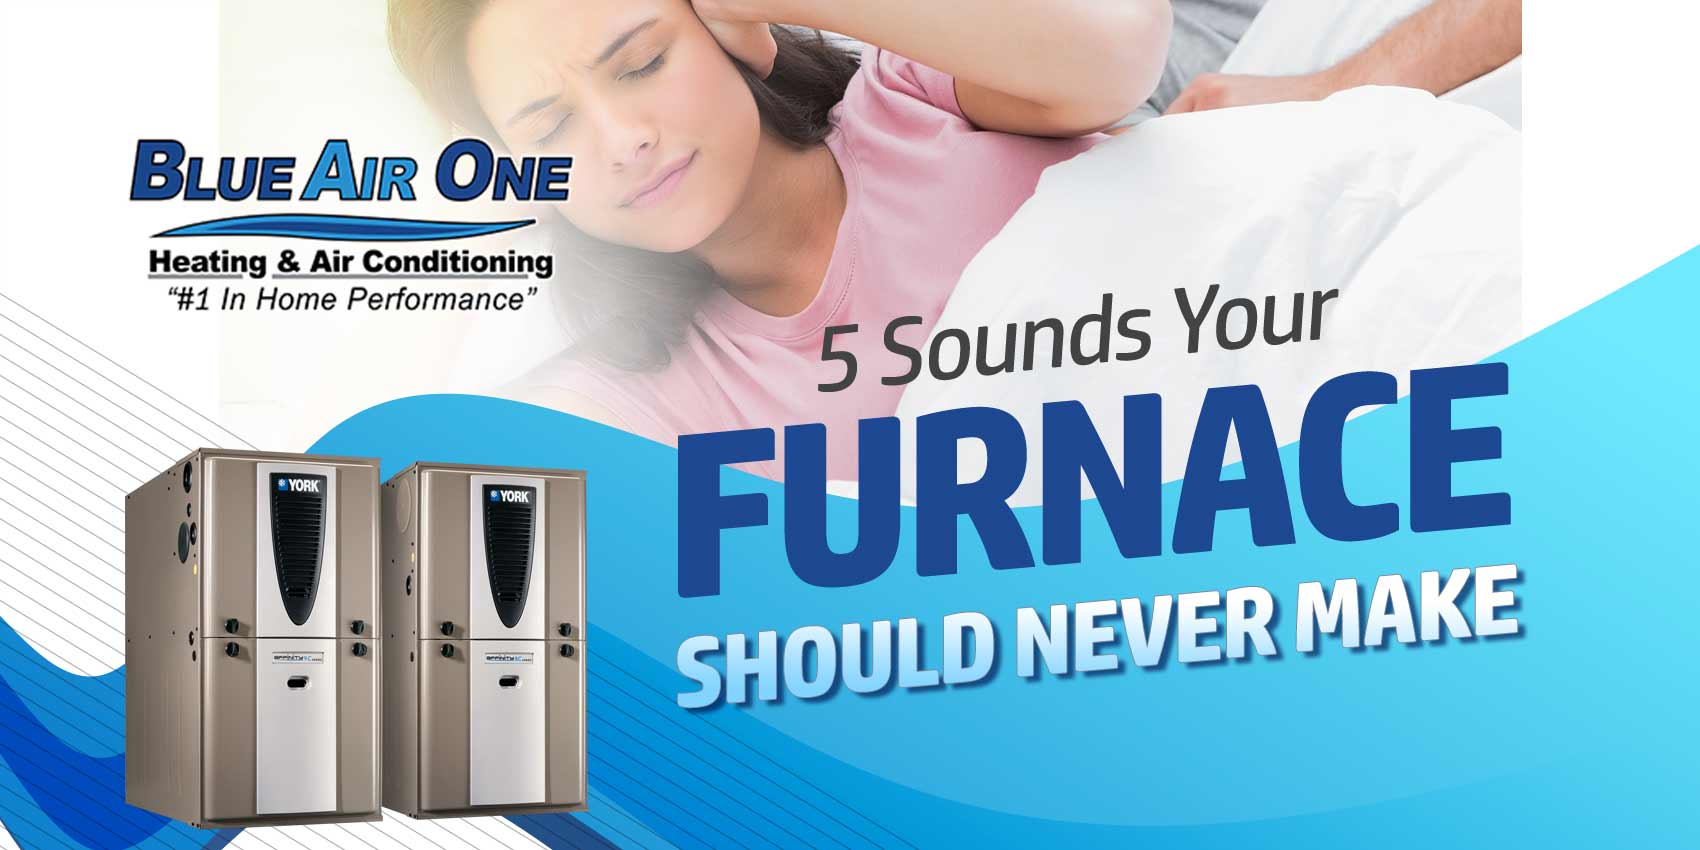 5 Sounds Your Furnace Should Never Make